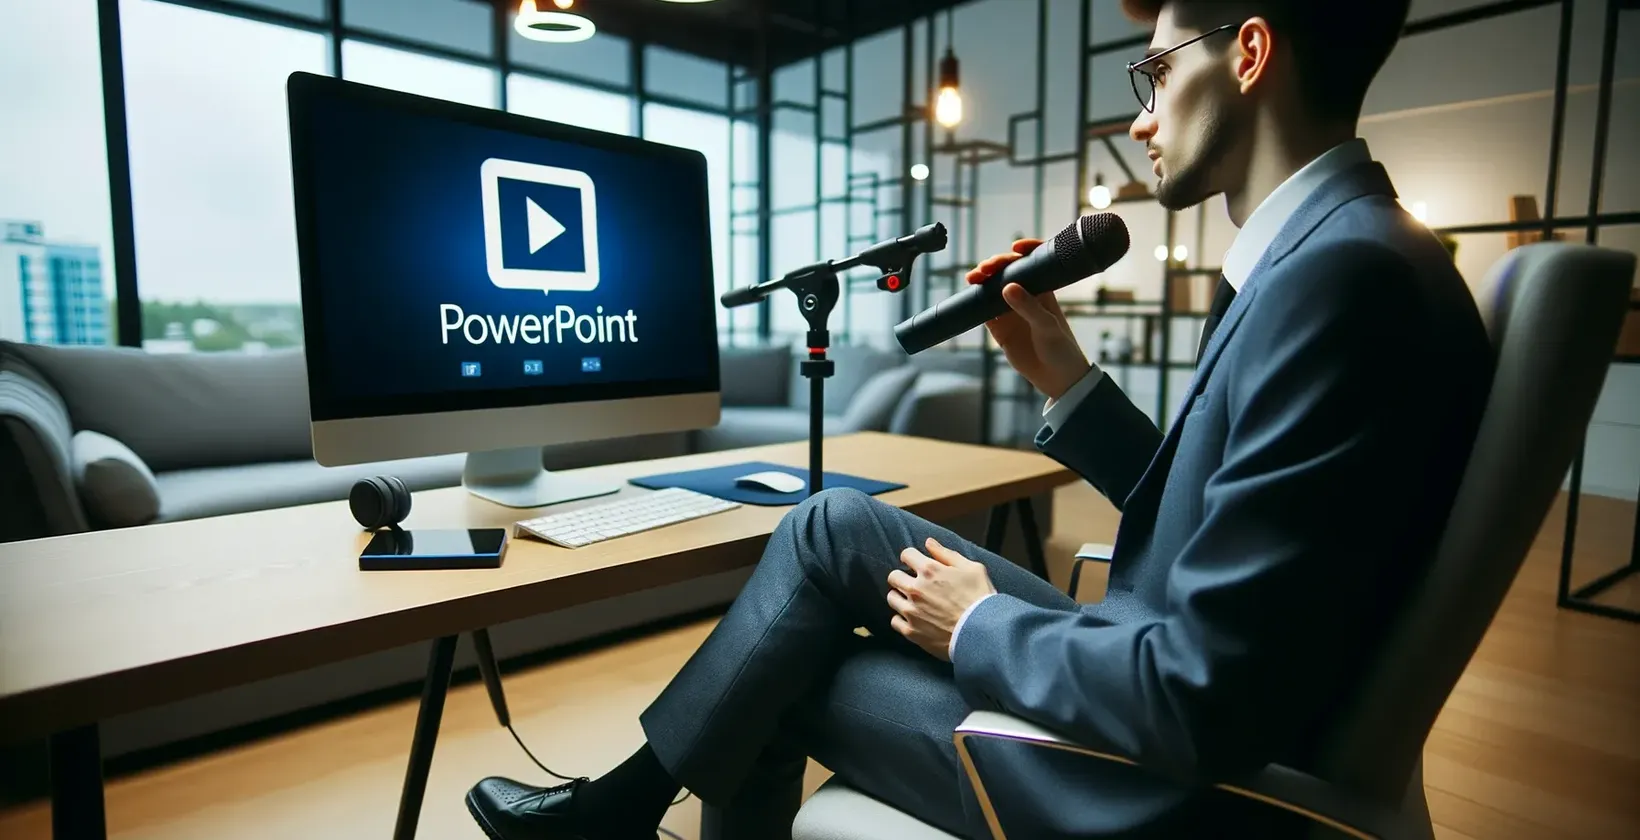 Mand på kontor med mikrofon ser på en skærm, der viser logoet PowerPoint.